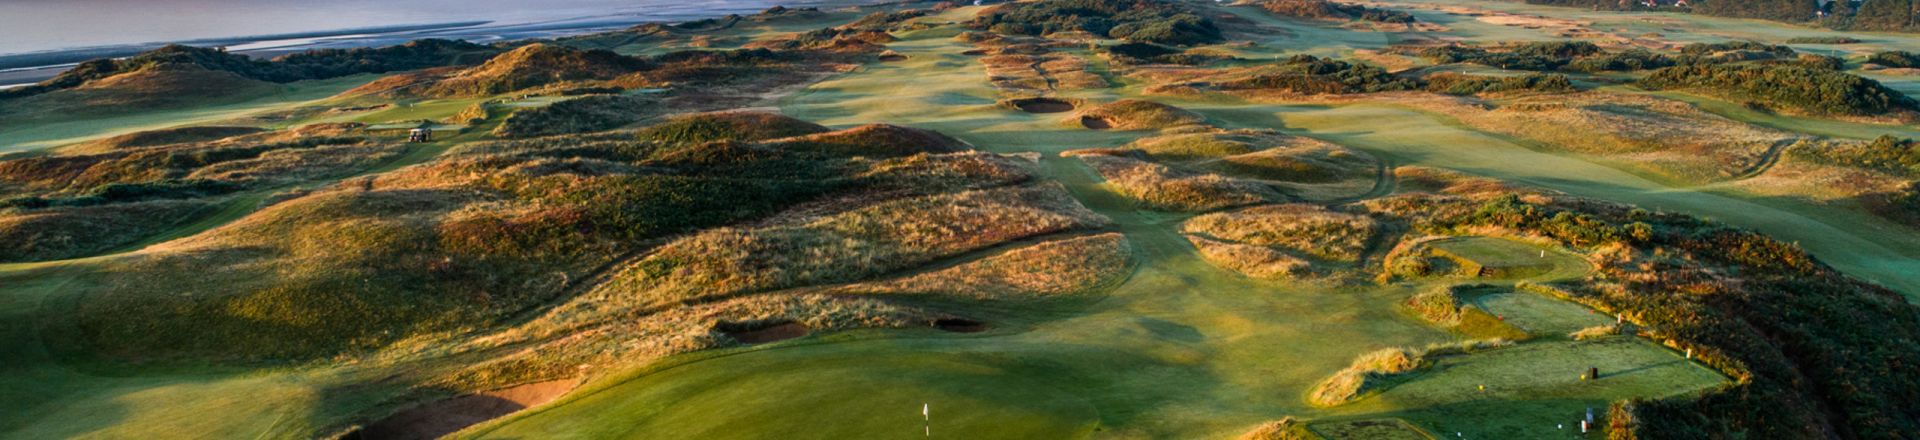 Golf Holidays in Northern Ireland at Royal County Down